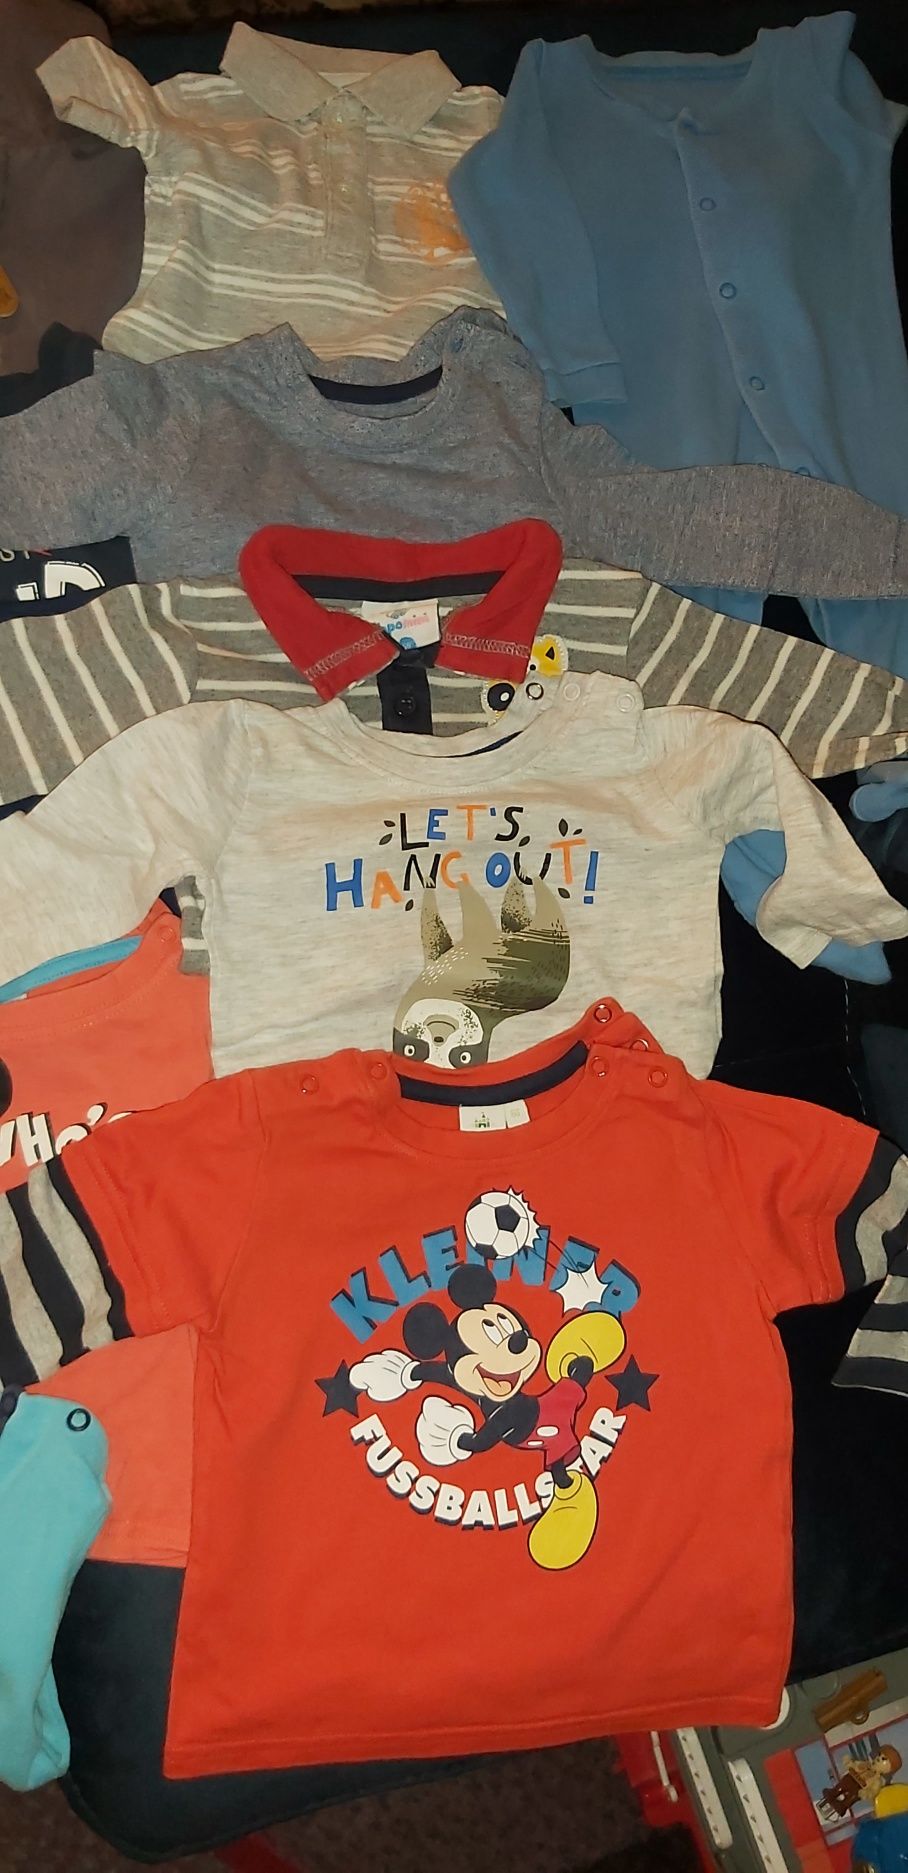 Ubranka dla chłopca, koszulki, 26 sztuk, sweterki, koszule rozm.62/68